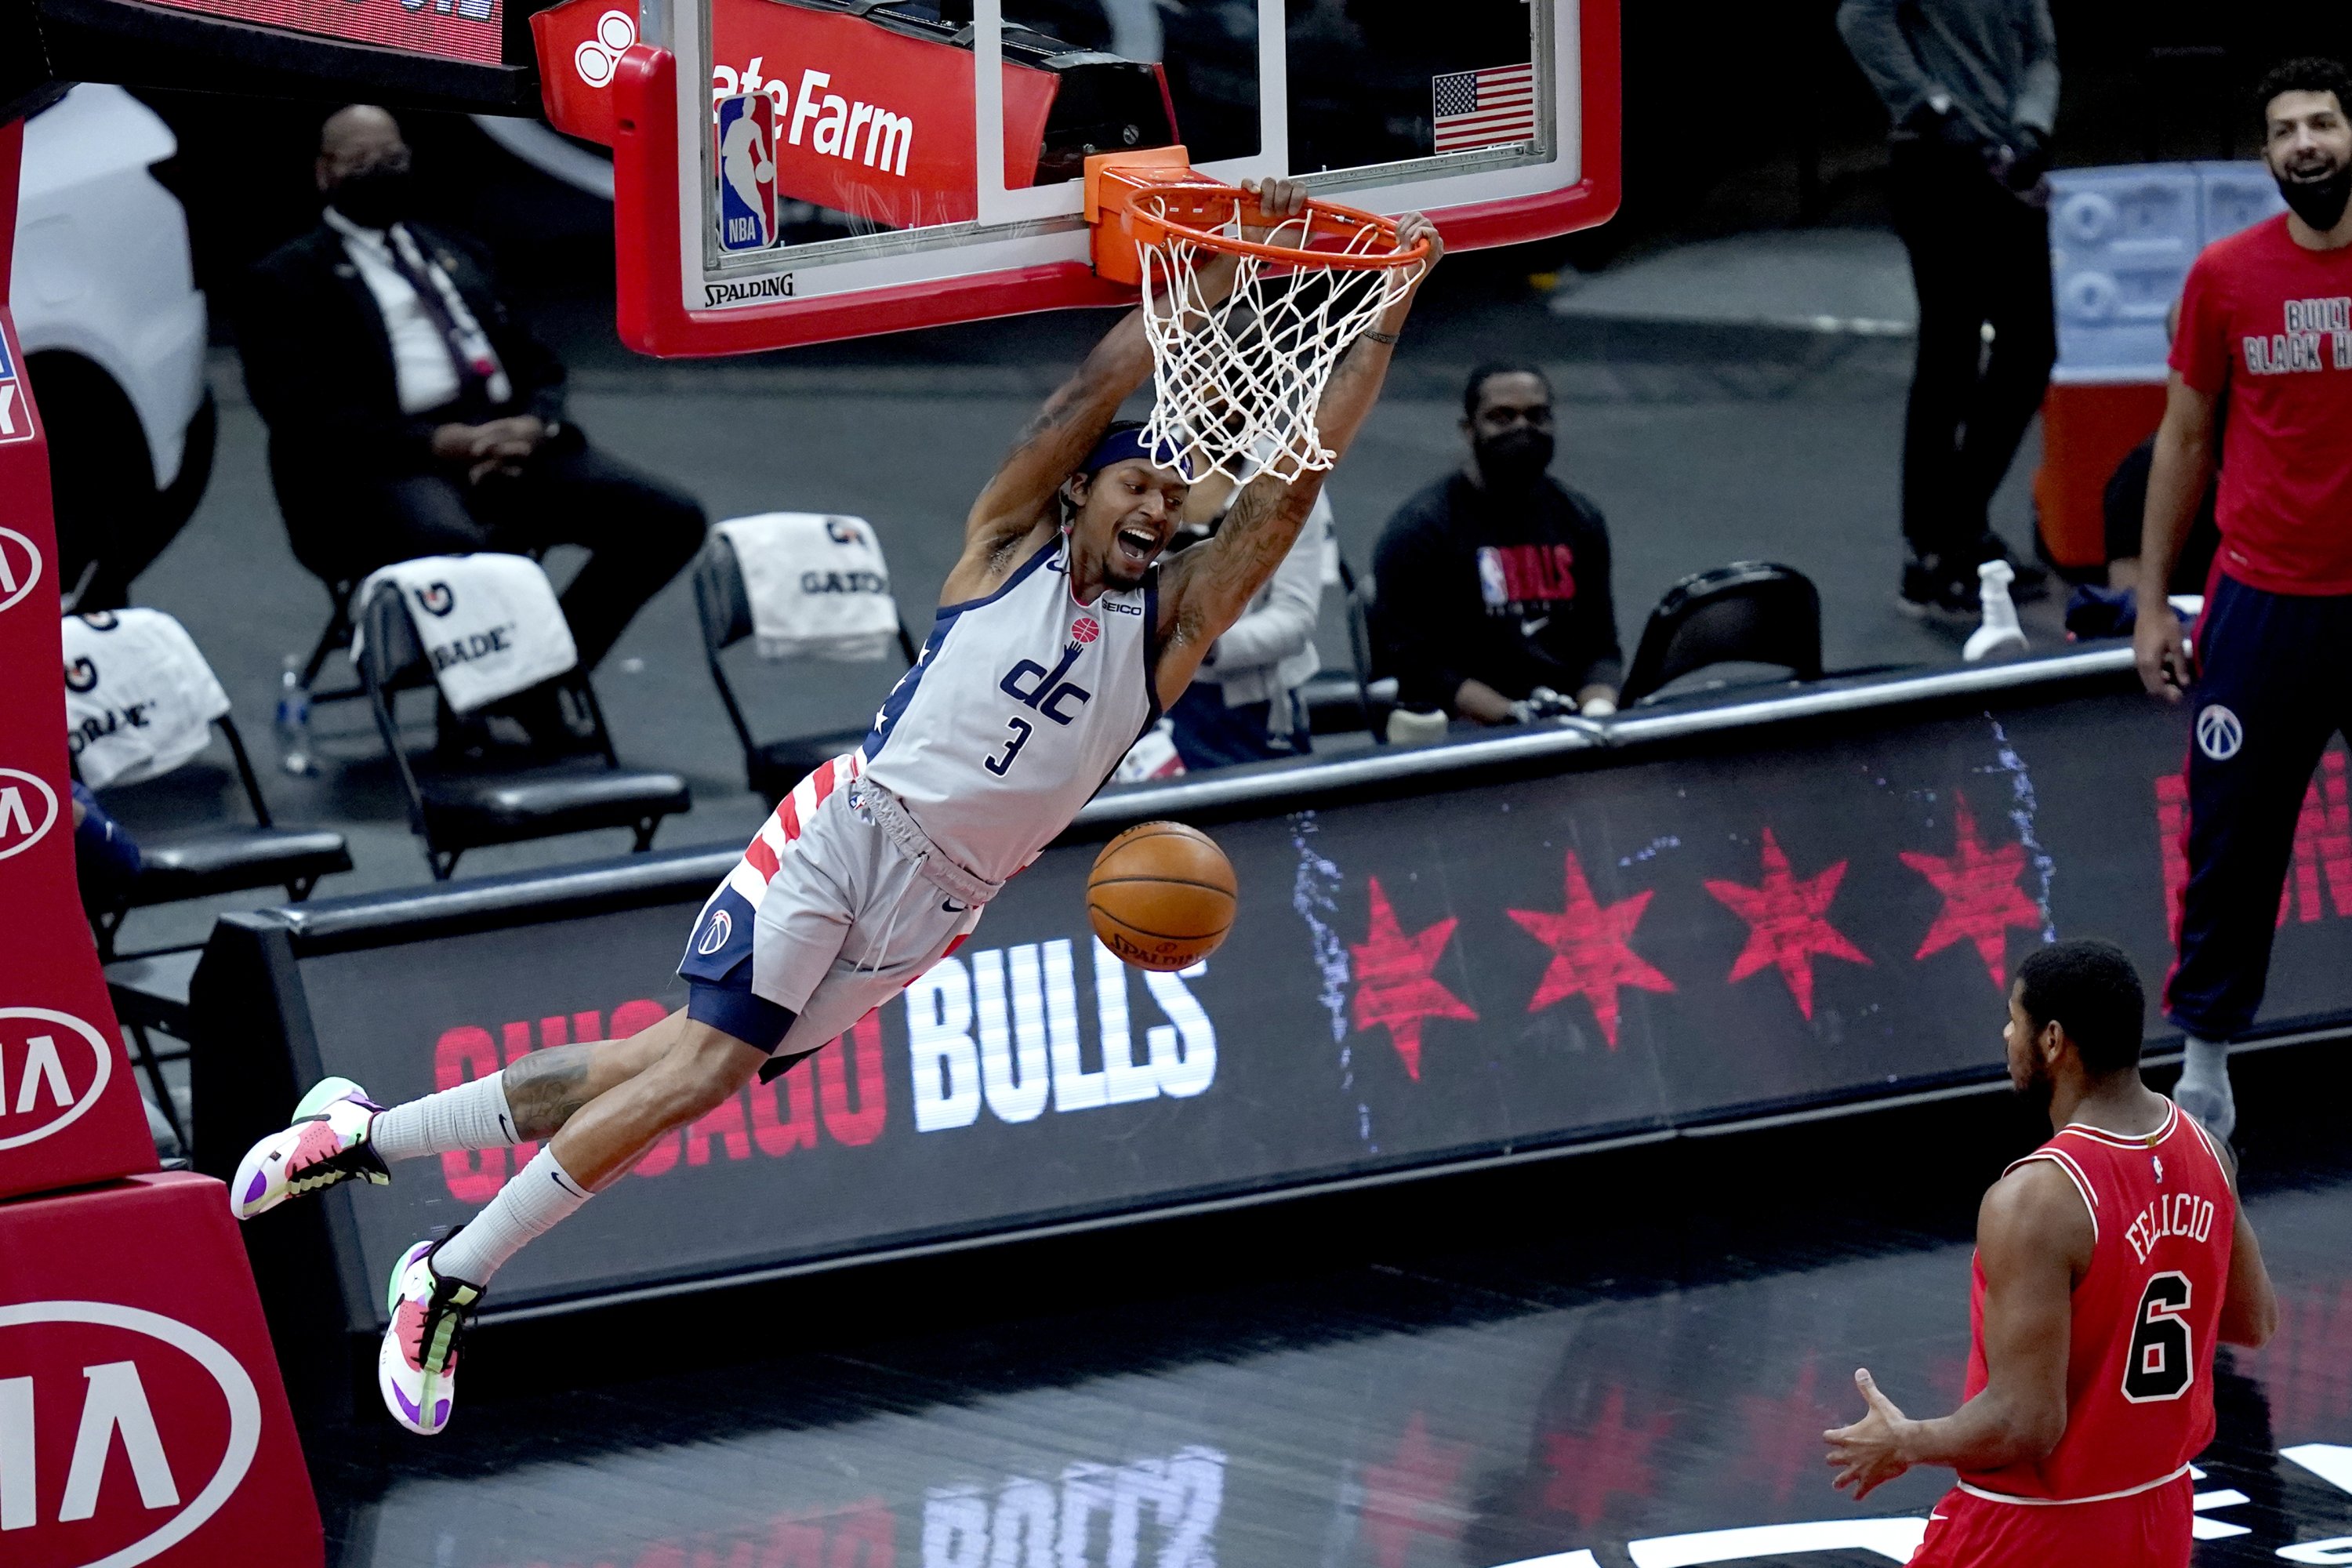 Washington Wizards' Bradley Beal (L) dunks the ball as Chicago Bulls' Cristiano Felicio watches during an NBA basketball game, Chicago, U.S., Feb. 8, 2021. (AP Photo)